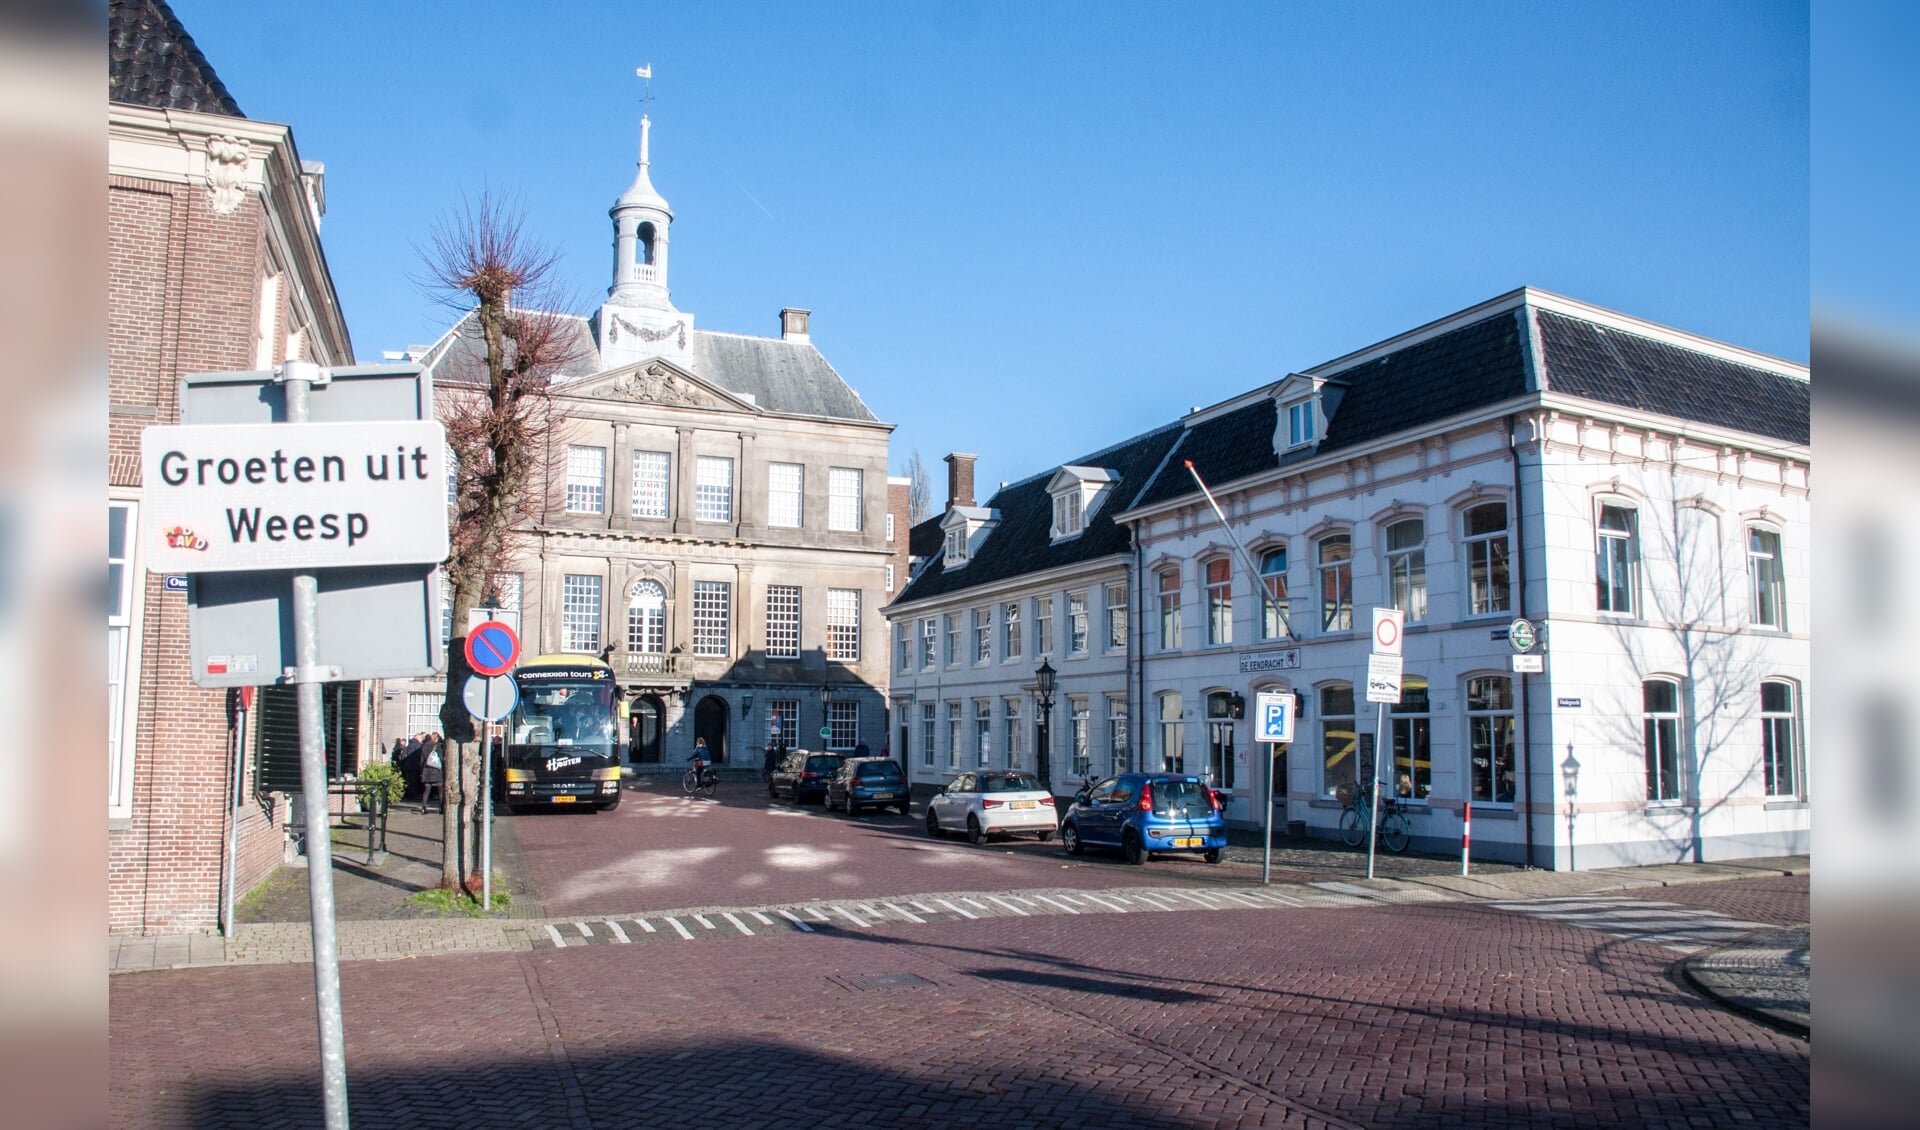 Het stadhuis van Weesp is nog in gebruik als stadhuis, in tegenstelling tot het oude stadhuis van Amsterdam dat het Paleis op de Dam is.